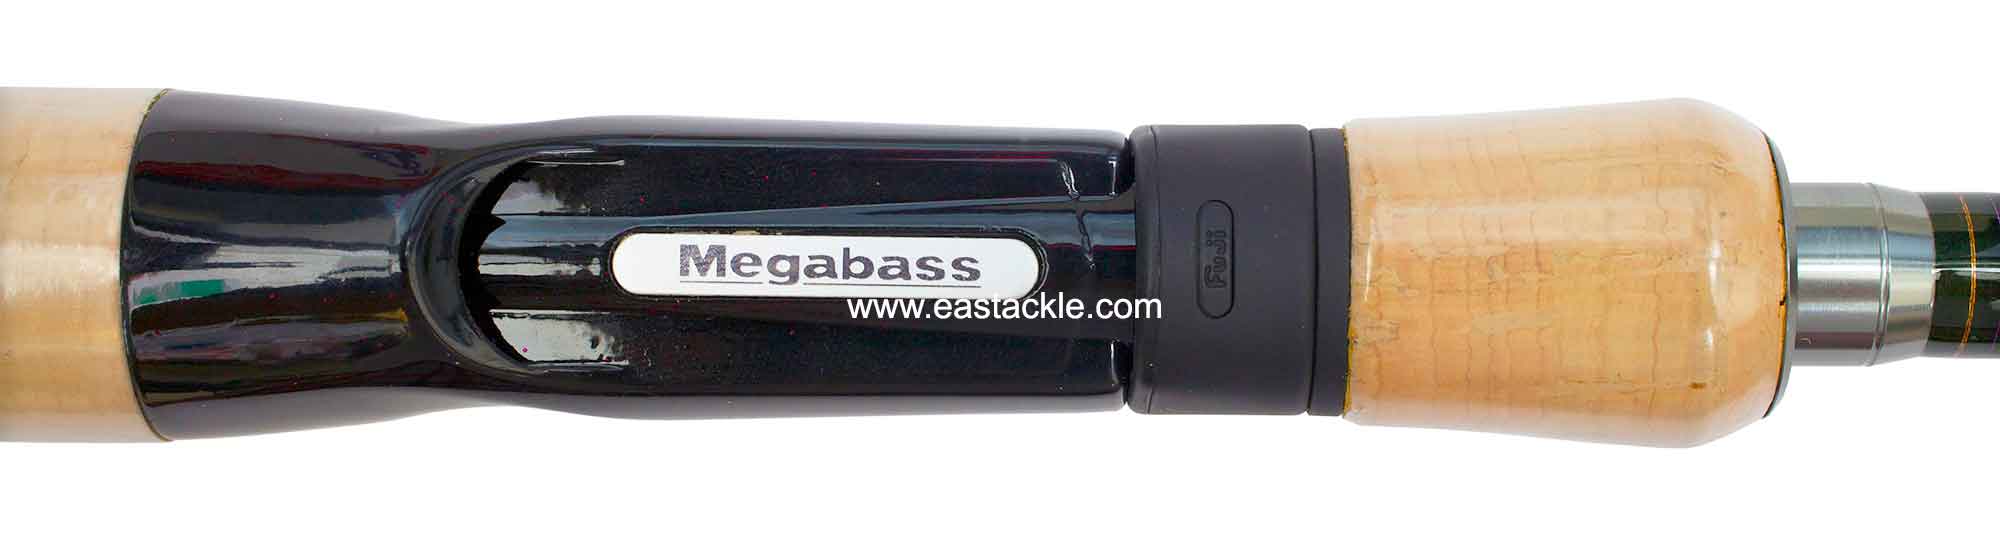 Megabass - Orochi XX - F4.1/2-70XX - FLAT SIDE SPECIAL - Bait Casting Rod (Top View)